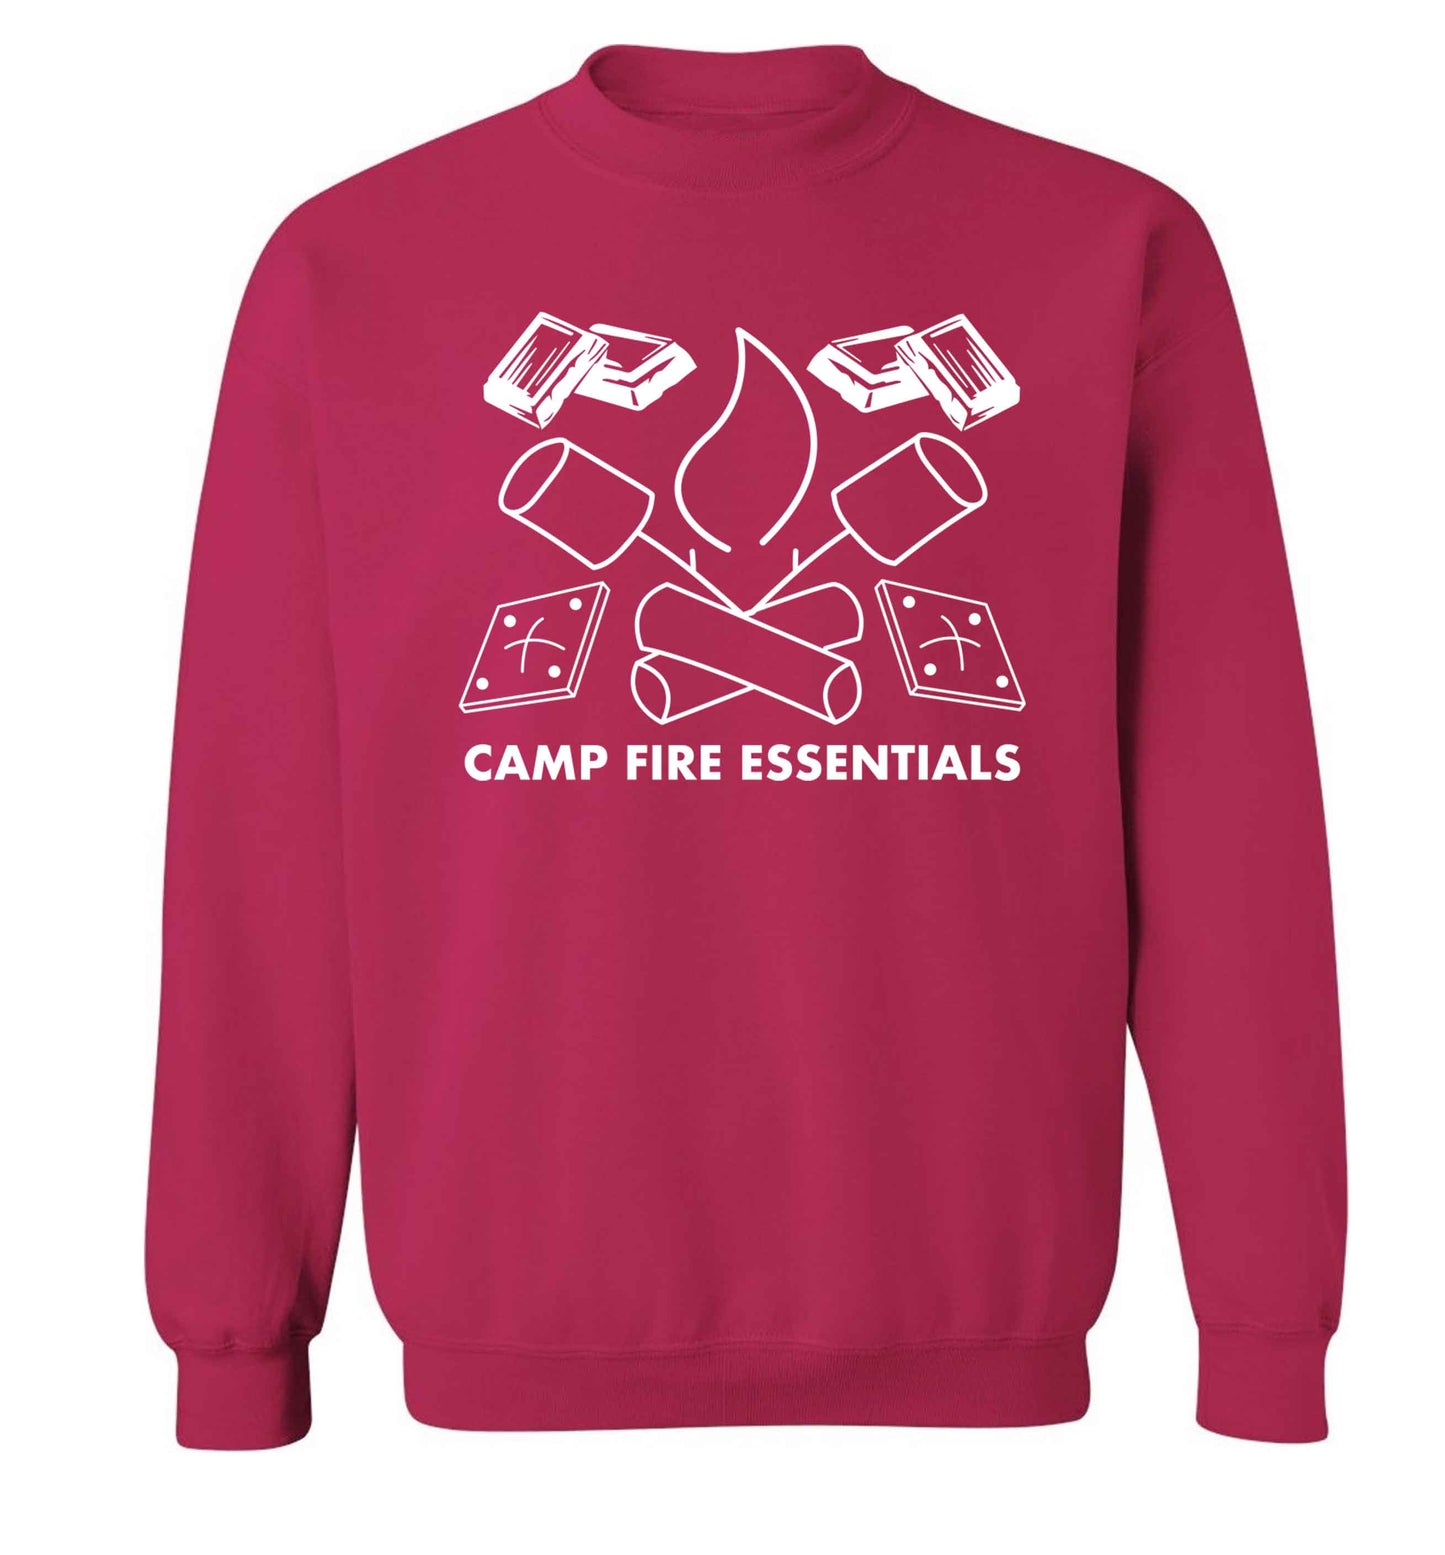 Campfire essentials Adult's unisex pink Sweater 2XL